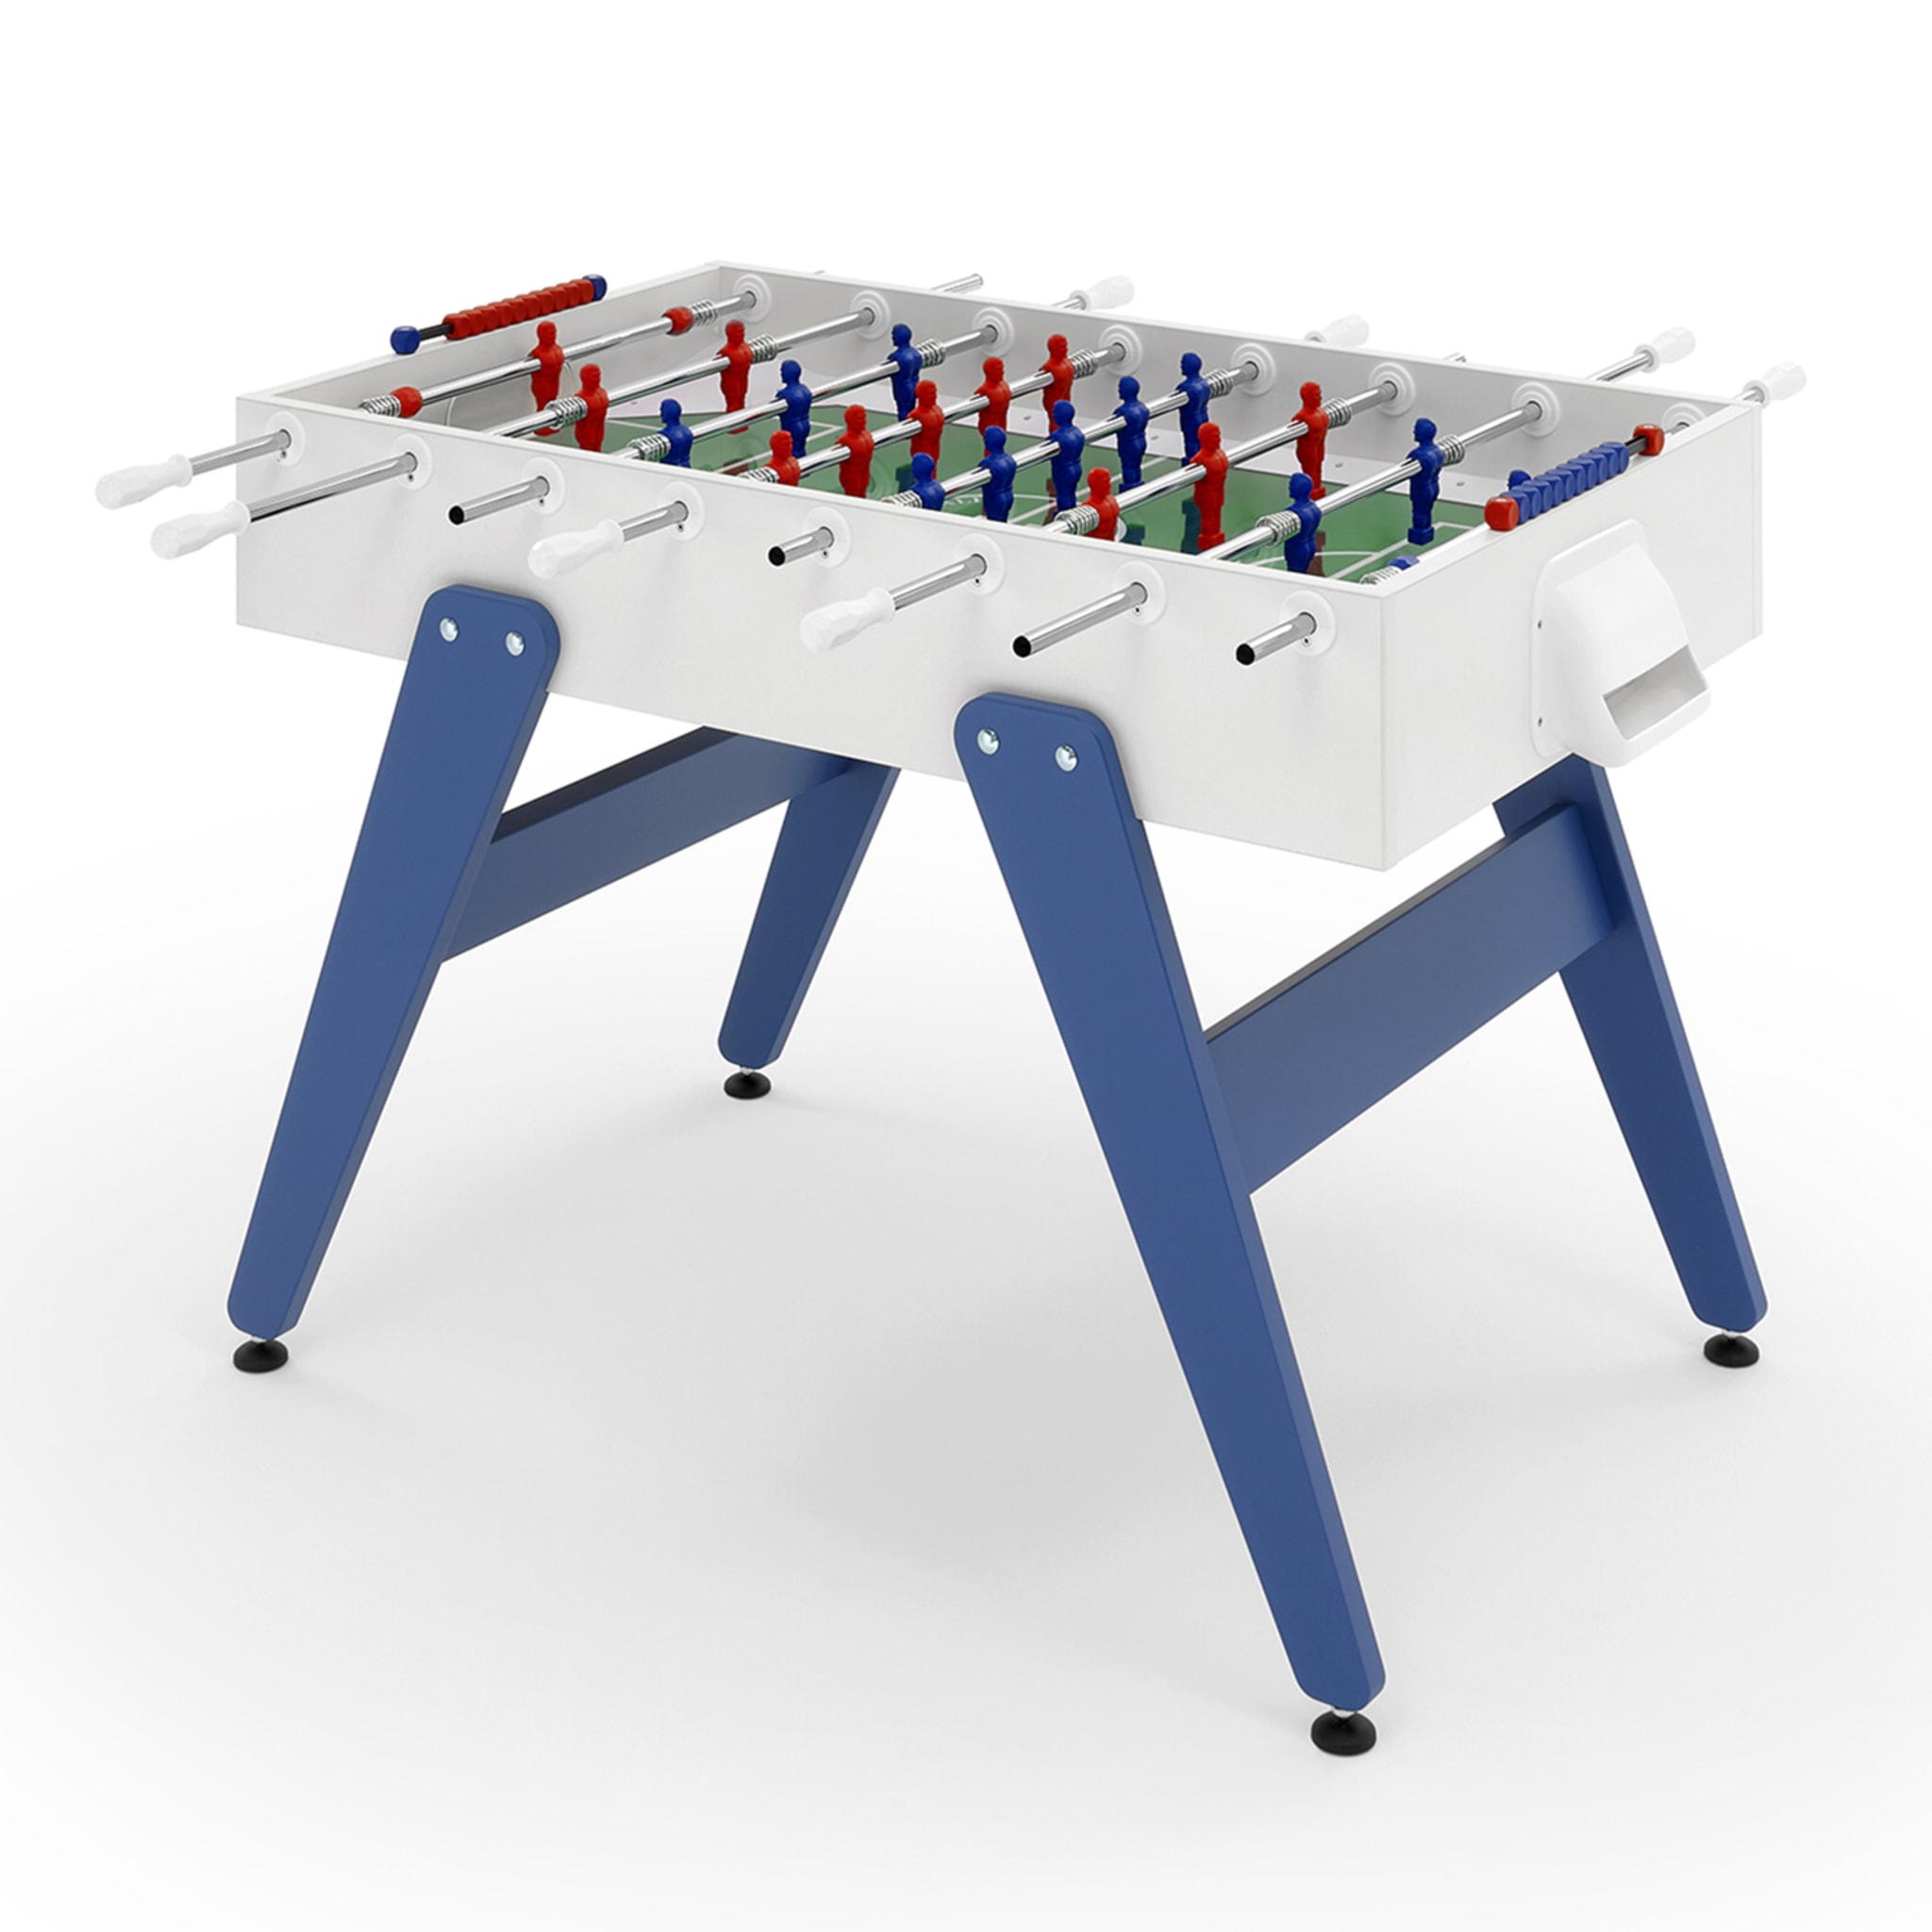 Cross White and Blue Foosball Table by Basaglia + Rota Nodari - Alternative view 1